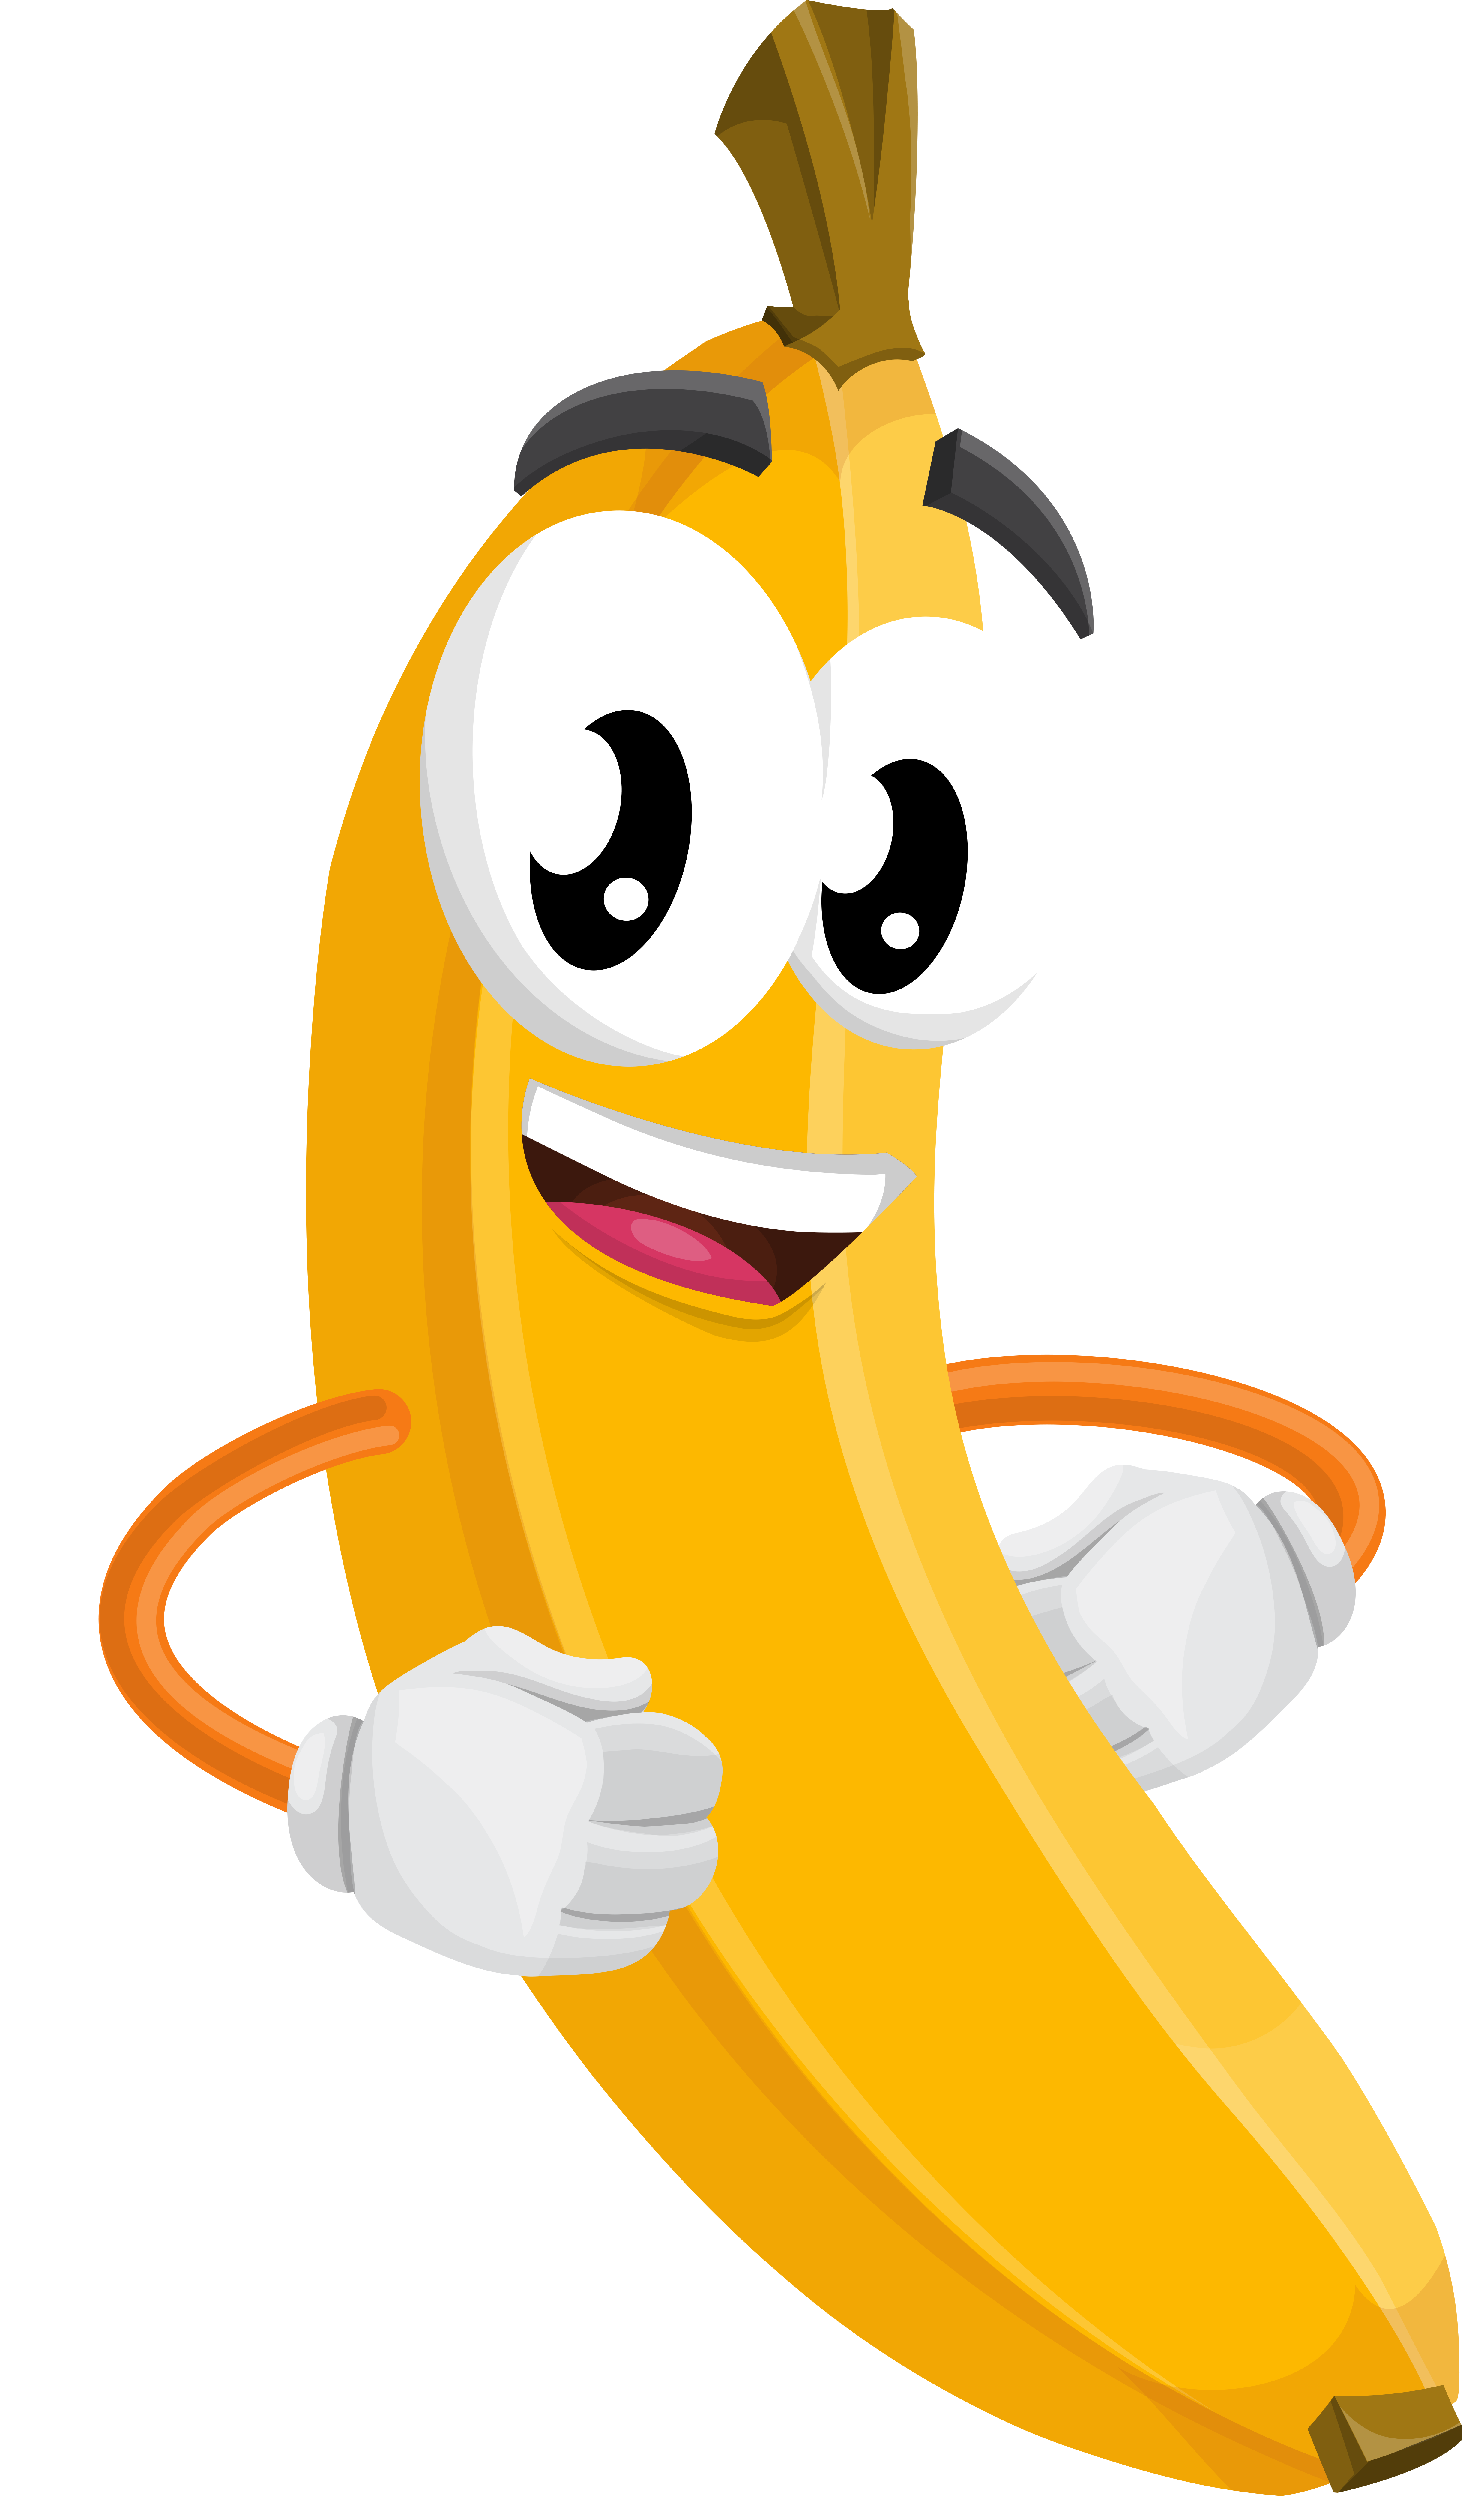 Download Clipart Icon - Cute Pixabay Bananas Nomads Adventures Banana Vecto...